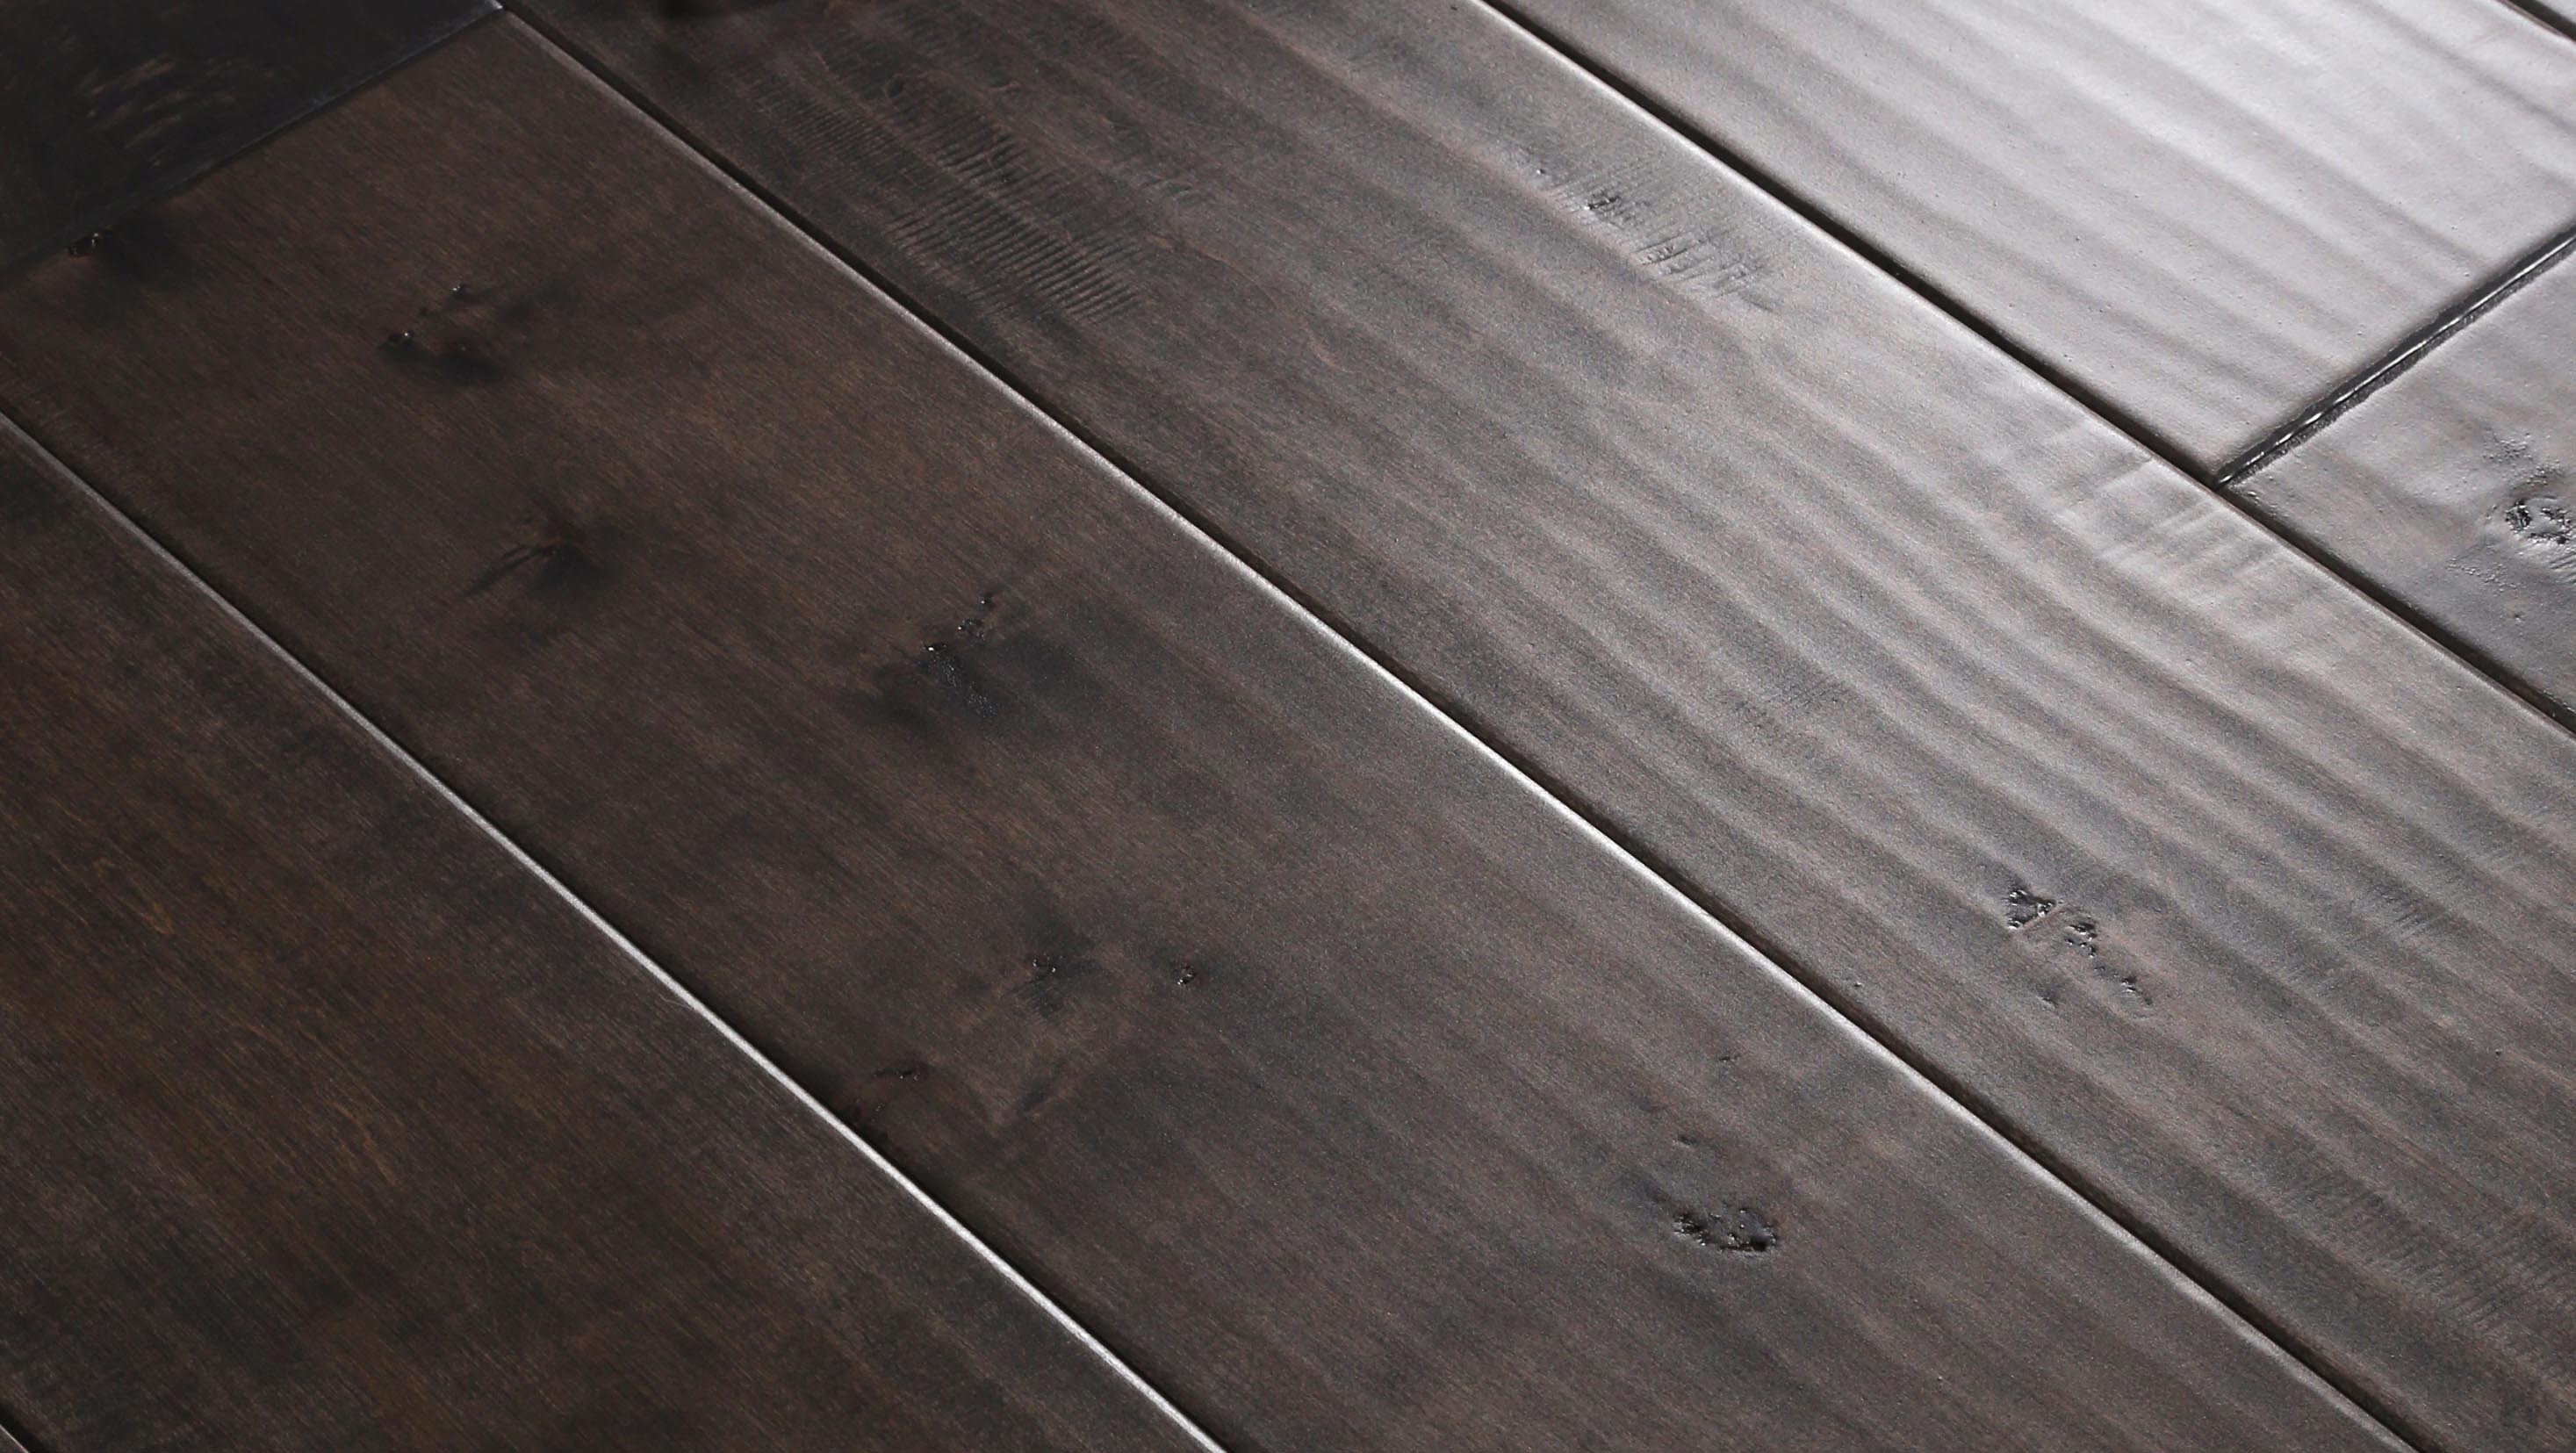 18 Stunning 5 Inch Vs 7 Inch Hardwood Flooring 2023 free download 5 inch vs 7 inch hardwood flooring of hardwood flooring in specifications